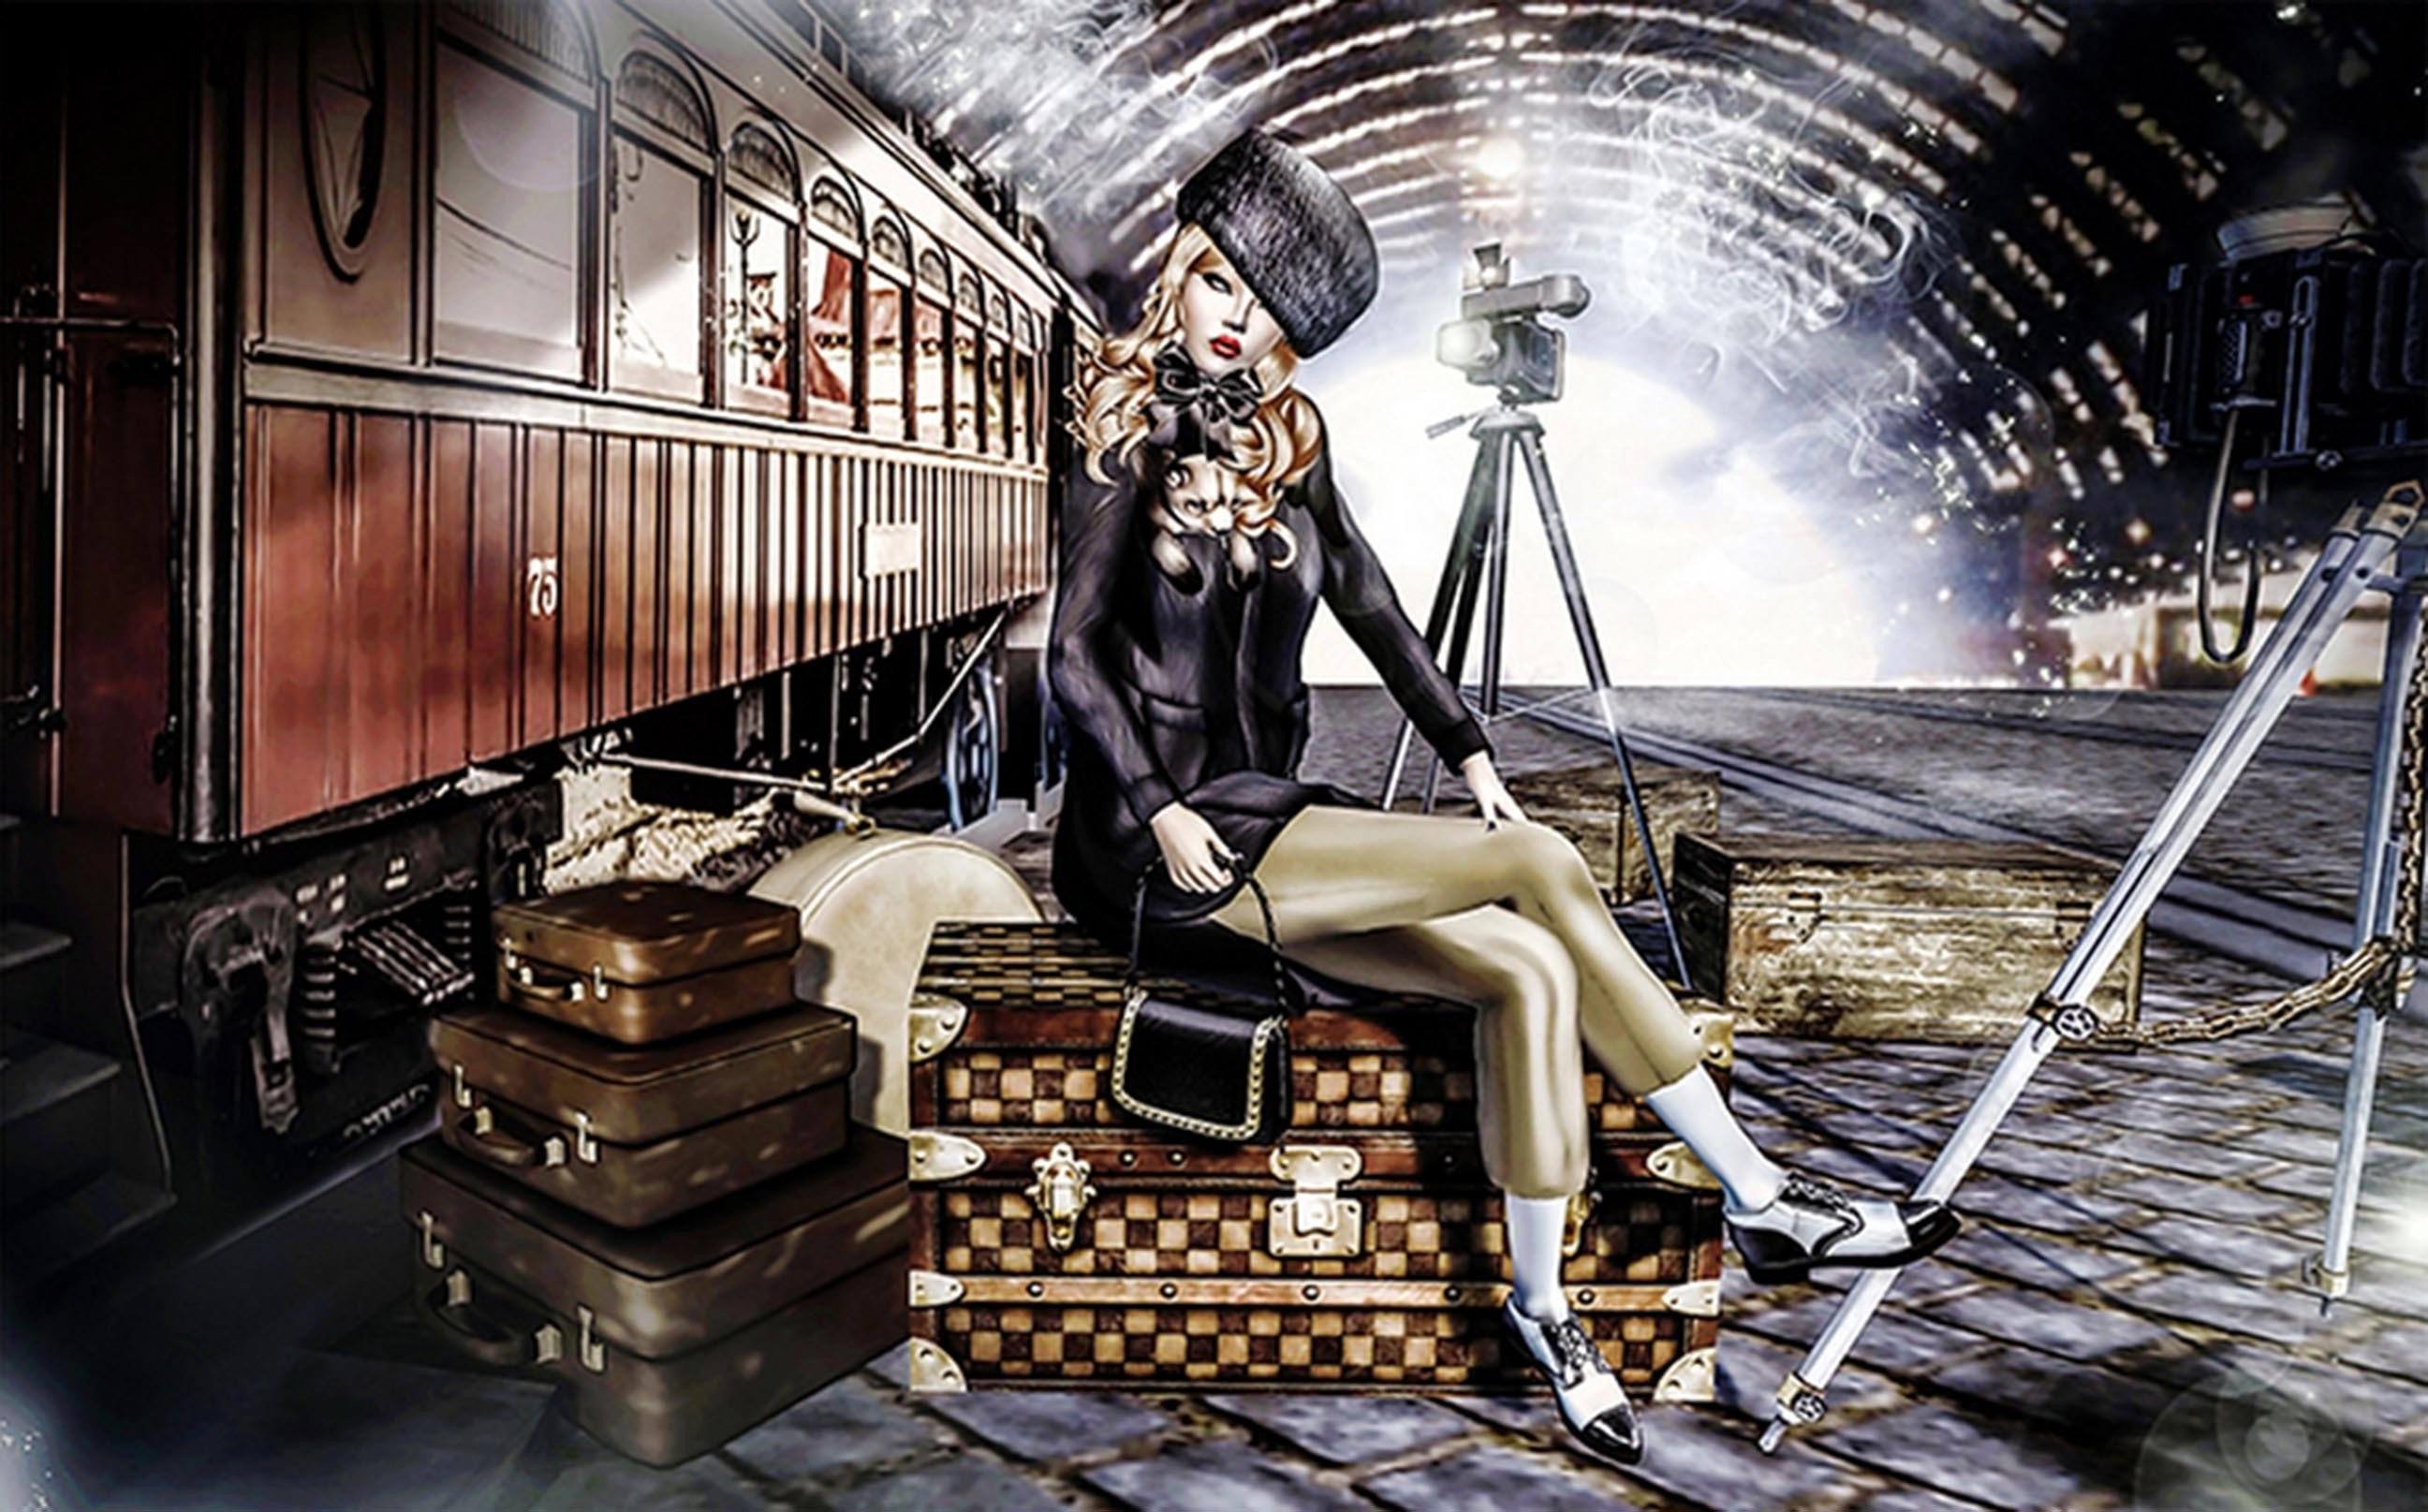 3D Railway Fashion Girl 77 Garage Door Mural Wallpaper AJ Wallpaper 